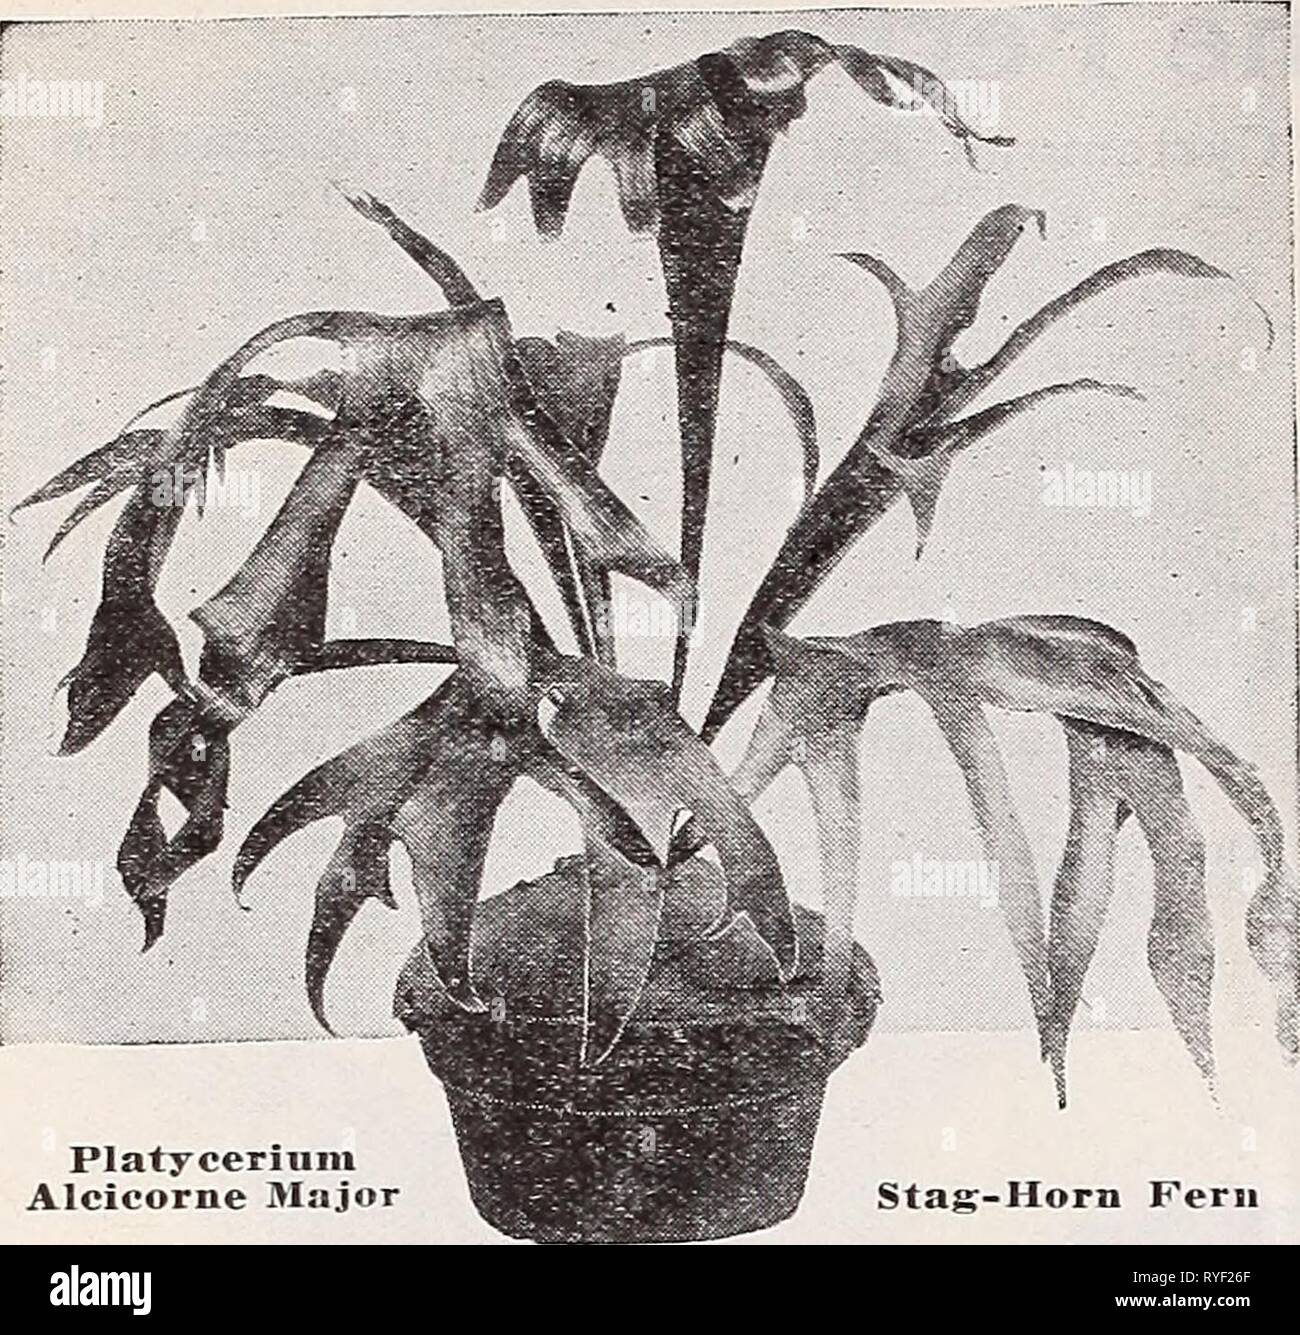 Dreer's wholesale price list for florists : bulbs flower seeds lawn grass seeds plants sundries  dreerswholesalep1933henr Year: 1933  14 HENRY A. DREER Greenhouse Plants WHOLESALE LIST    Veitcfai. Gardenia (Cape Jessamine) Strong. 5-inch pots, 75 cts. each. Platy cerium Alcicorne Major Stag-Horn Fern General Collection of Ferns Inch Po Adiantum Cnueatuin 2V4 — Hybriduin 2Y* Aspidium Tsassiniense 2*4 Blechnum Braziliensis 2V4 Cyrtomium Rochfordiannin Coinpactum -' 'j I.omaria Ciliata - ' i Pteris Adiantoides - '0 00 0 00 r,o 00 6 00 50 00 10 00 0 00 50 00 6 00 50 00 0 Otl 50 00 C 00 50 OO 6 00 Stock Photo